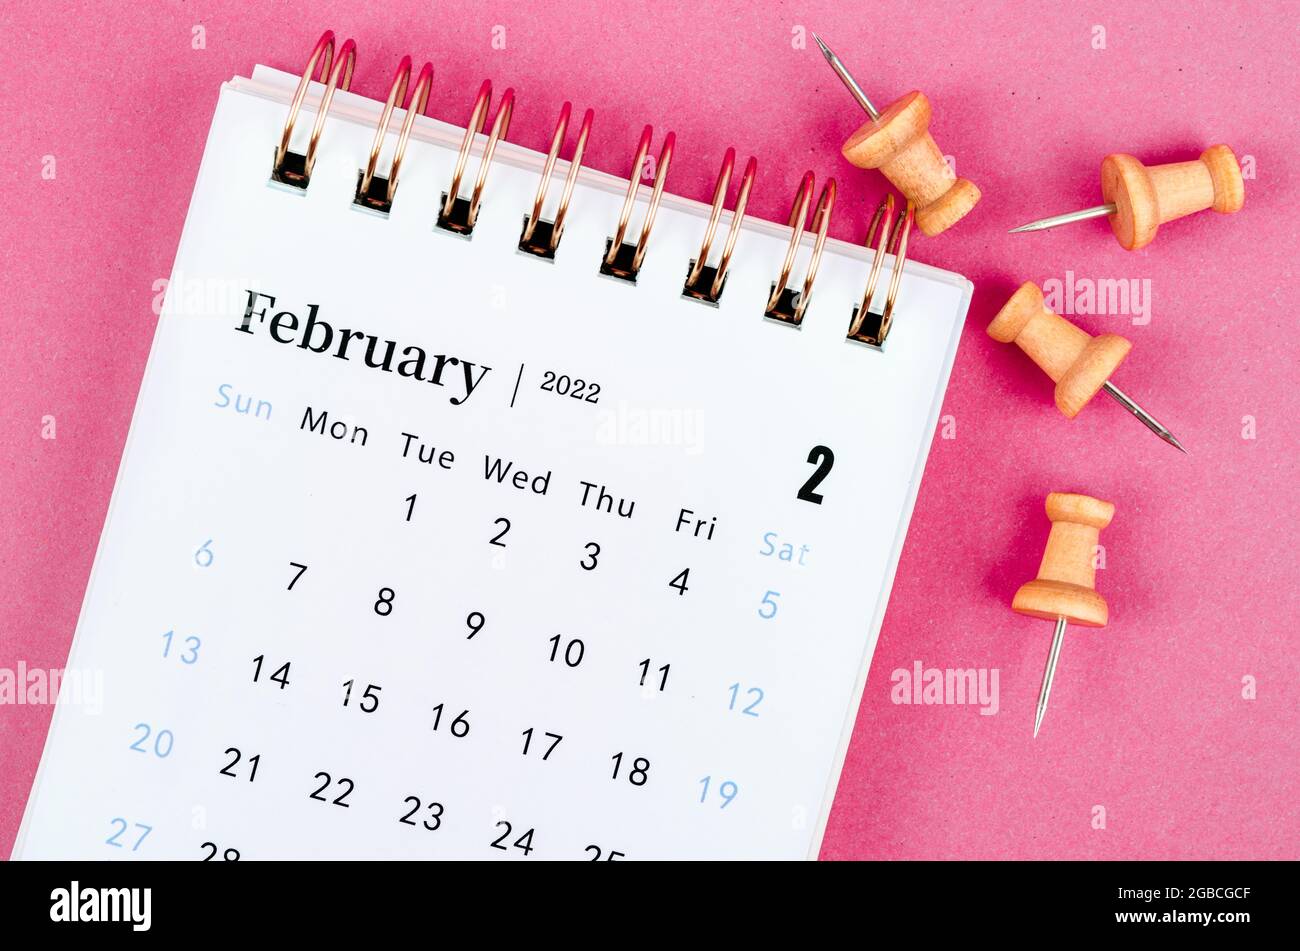 February 2022 Wallpaper Calendar 29+] February 2022 Calendar Wallpapers On Wallpapersafari